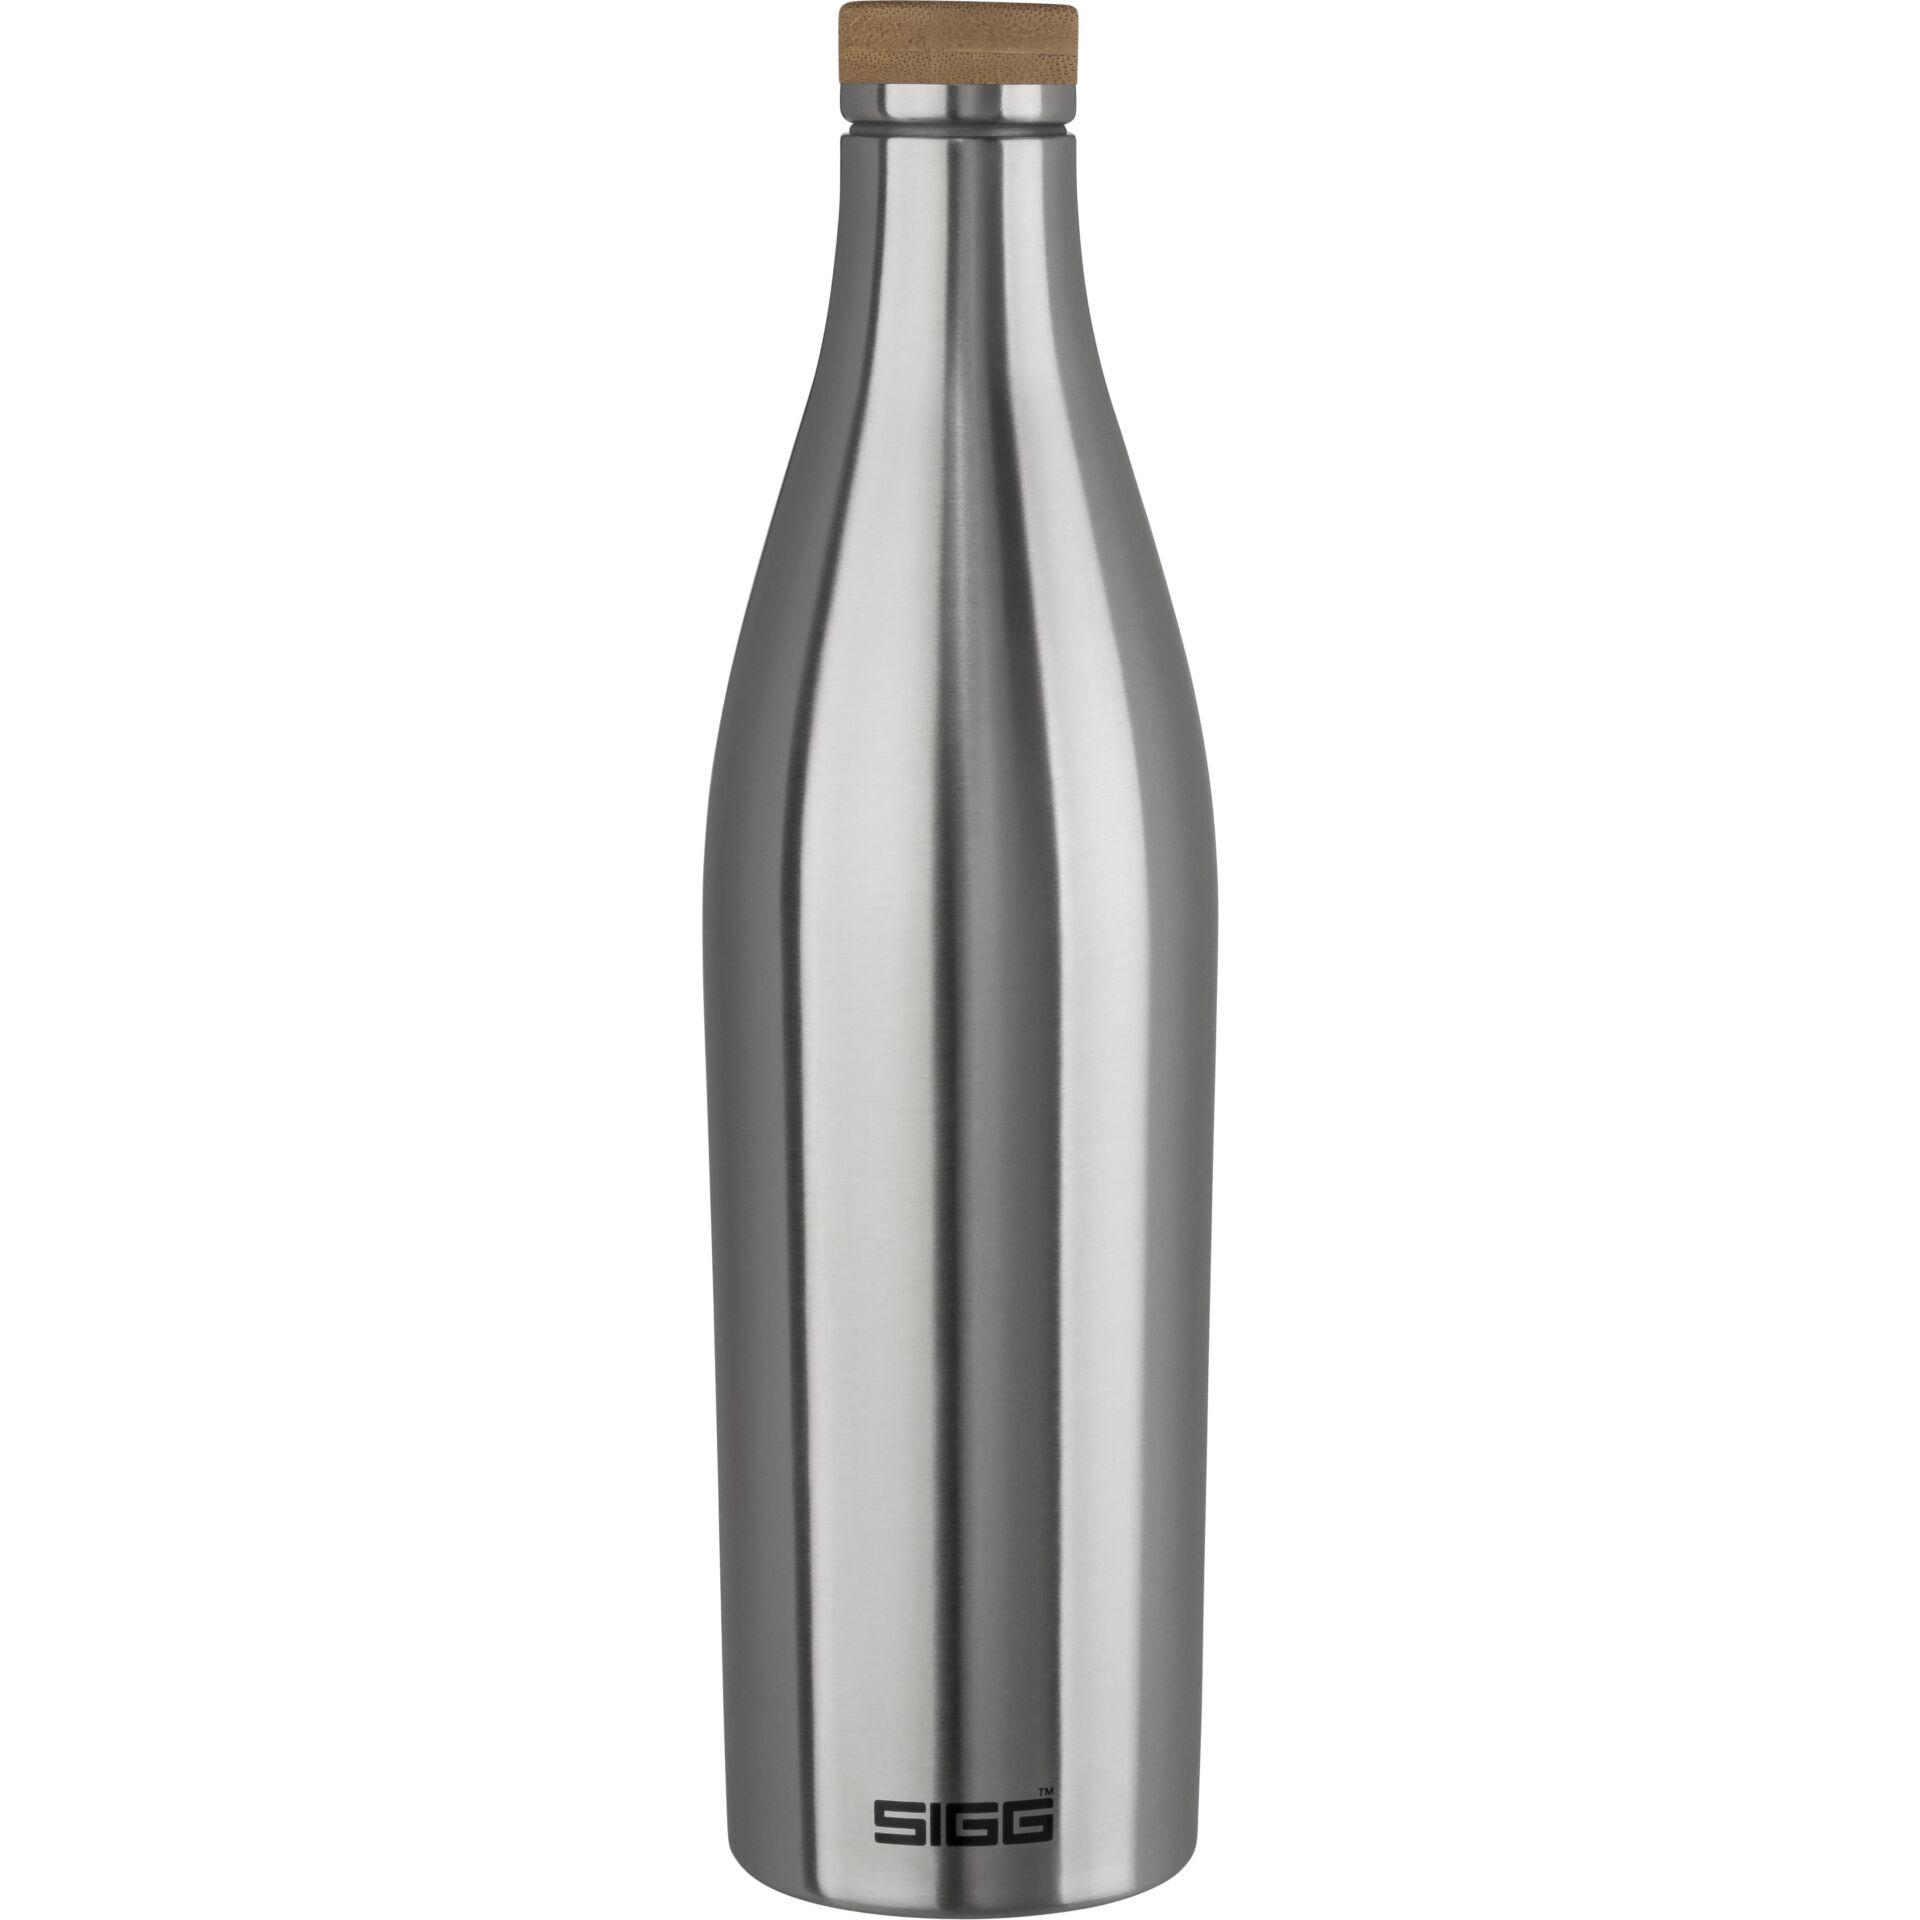 Sigg Meridian bottiglia argento 0.7 L